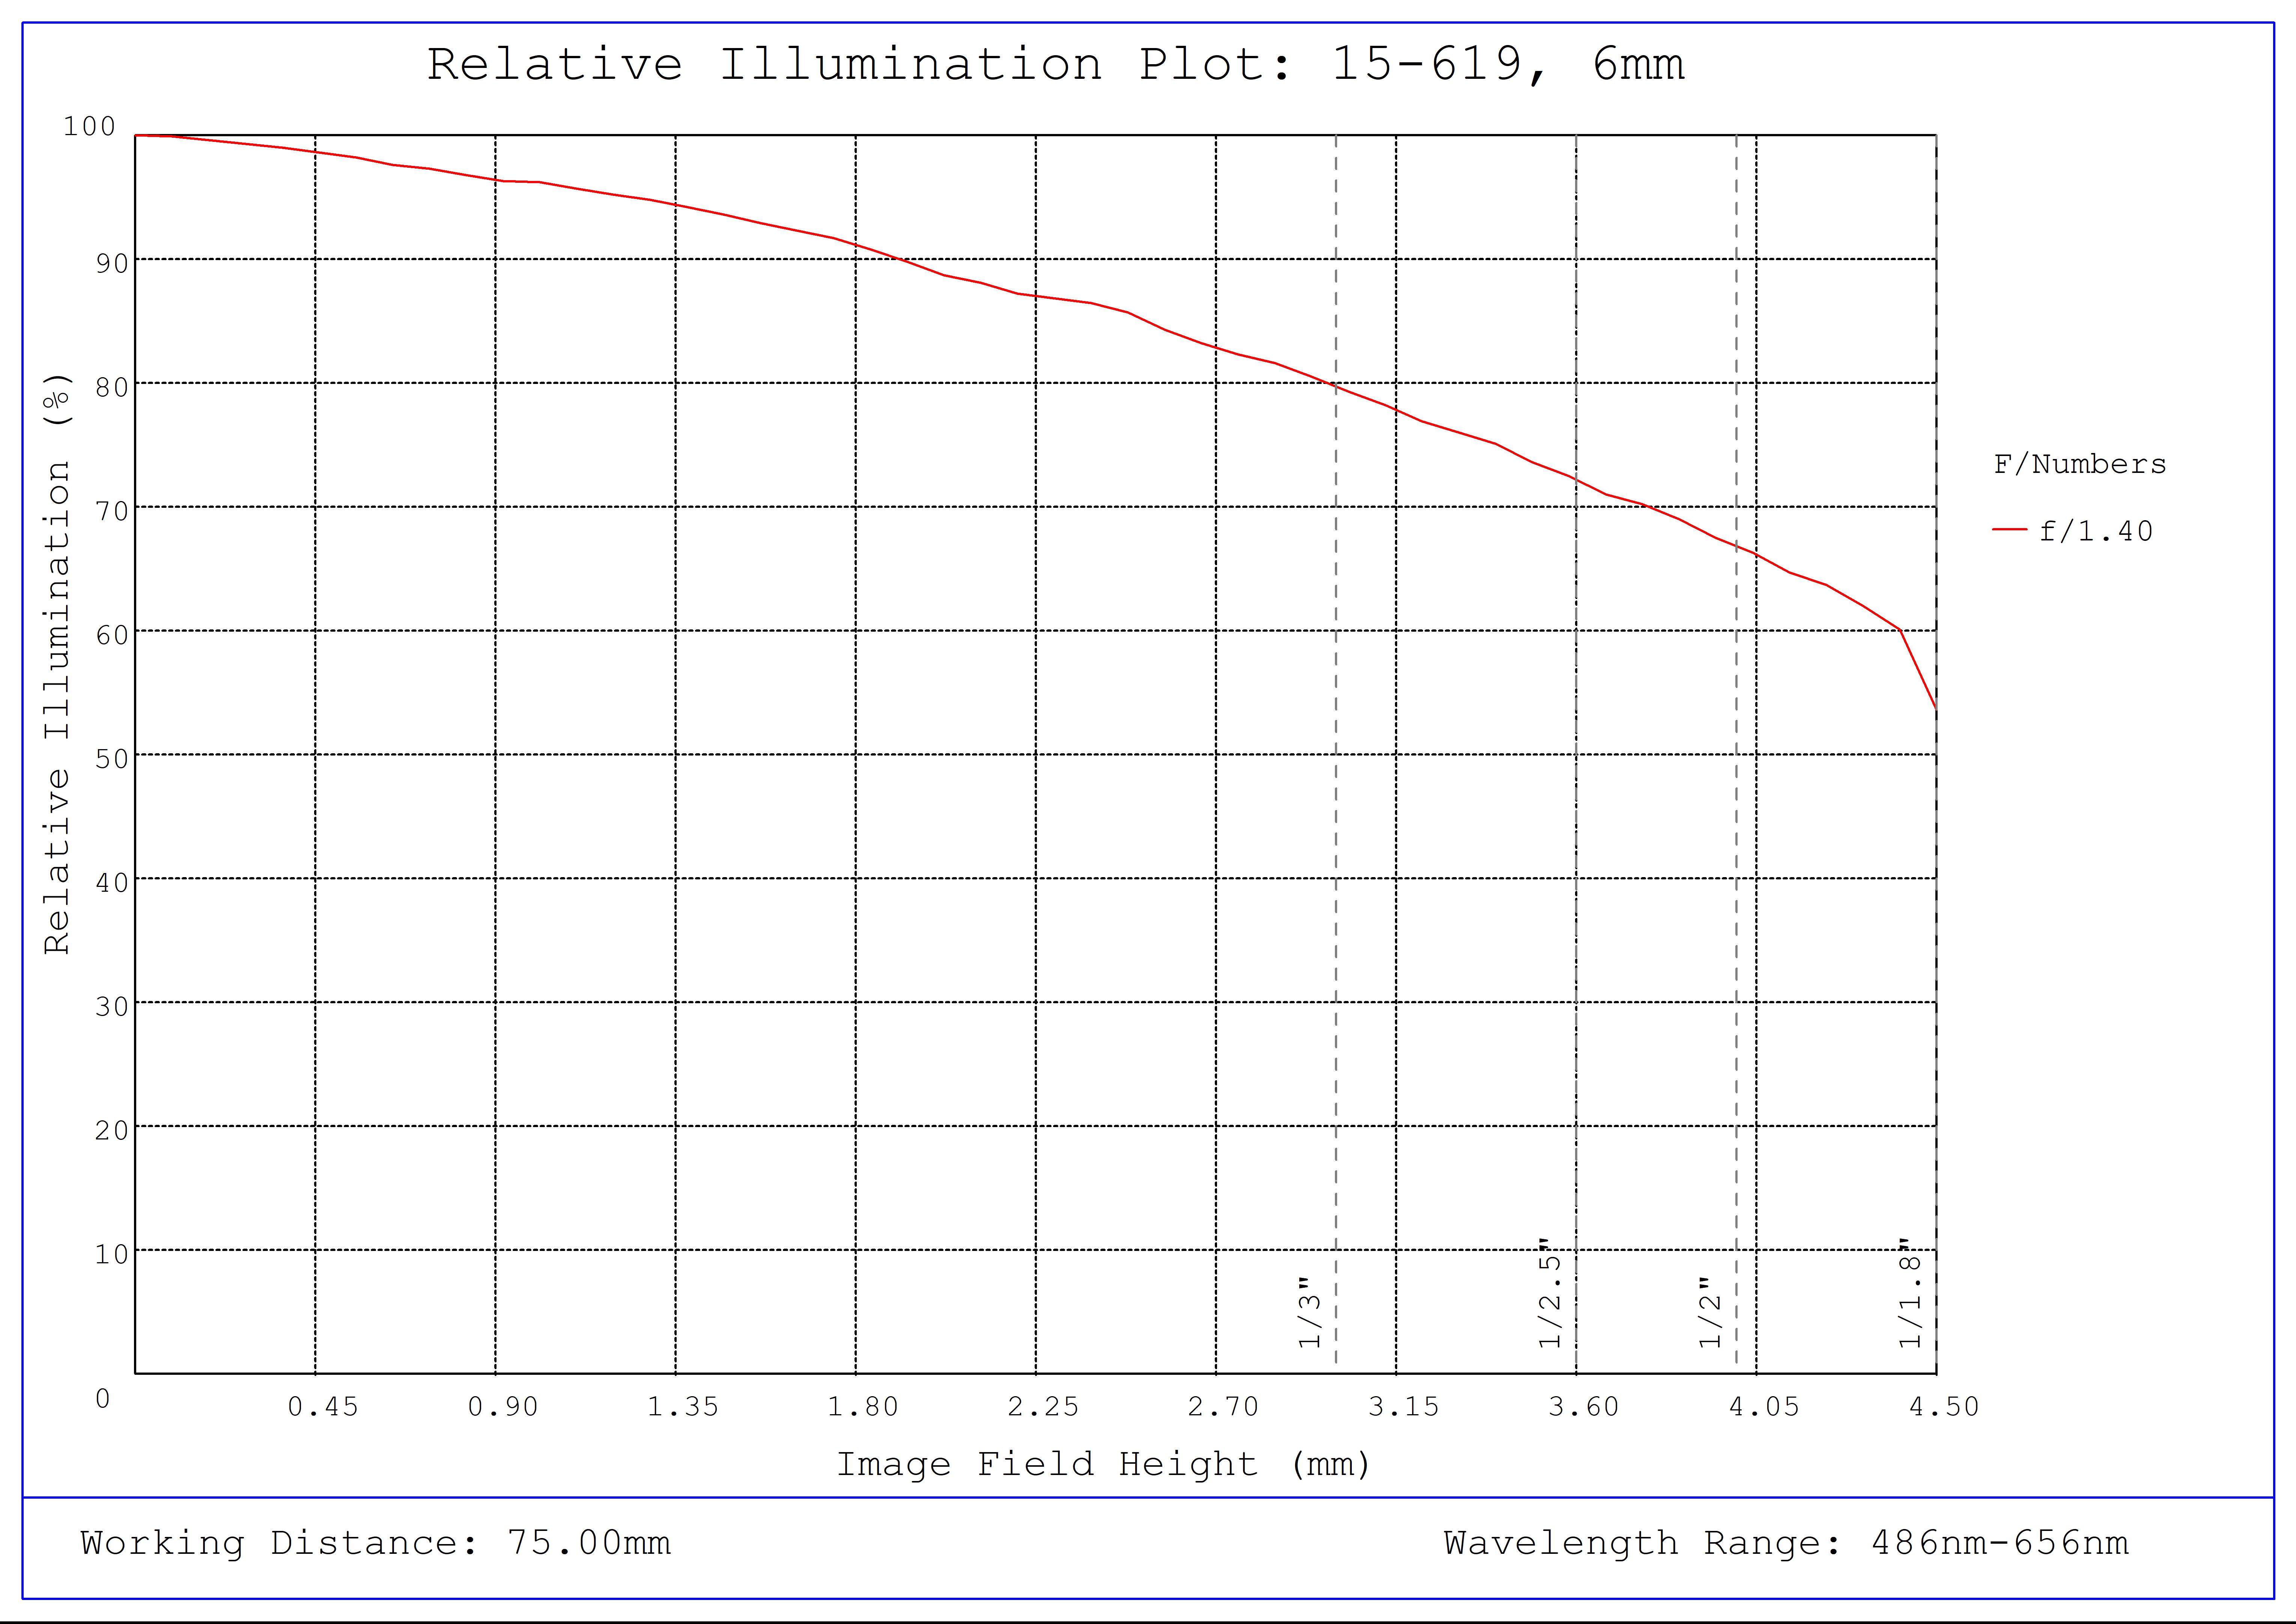 #15-619, 6mm, f/1.4 Cw Series Fixed Focal Length Lens, Relative Illumination Plot